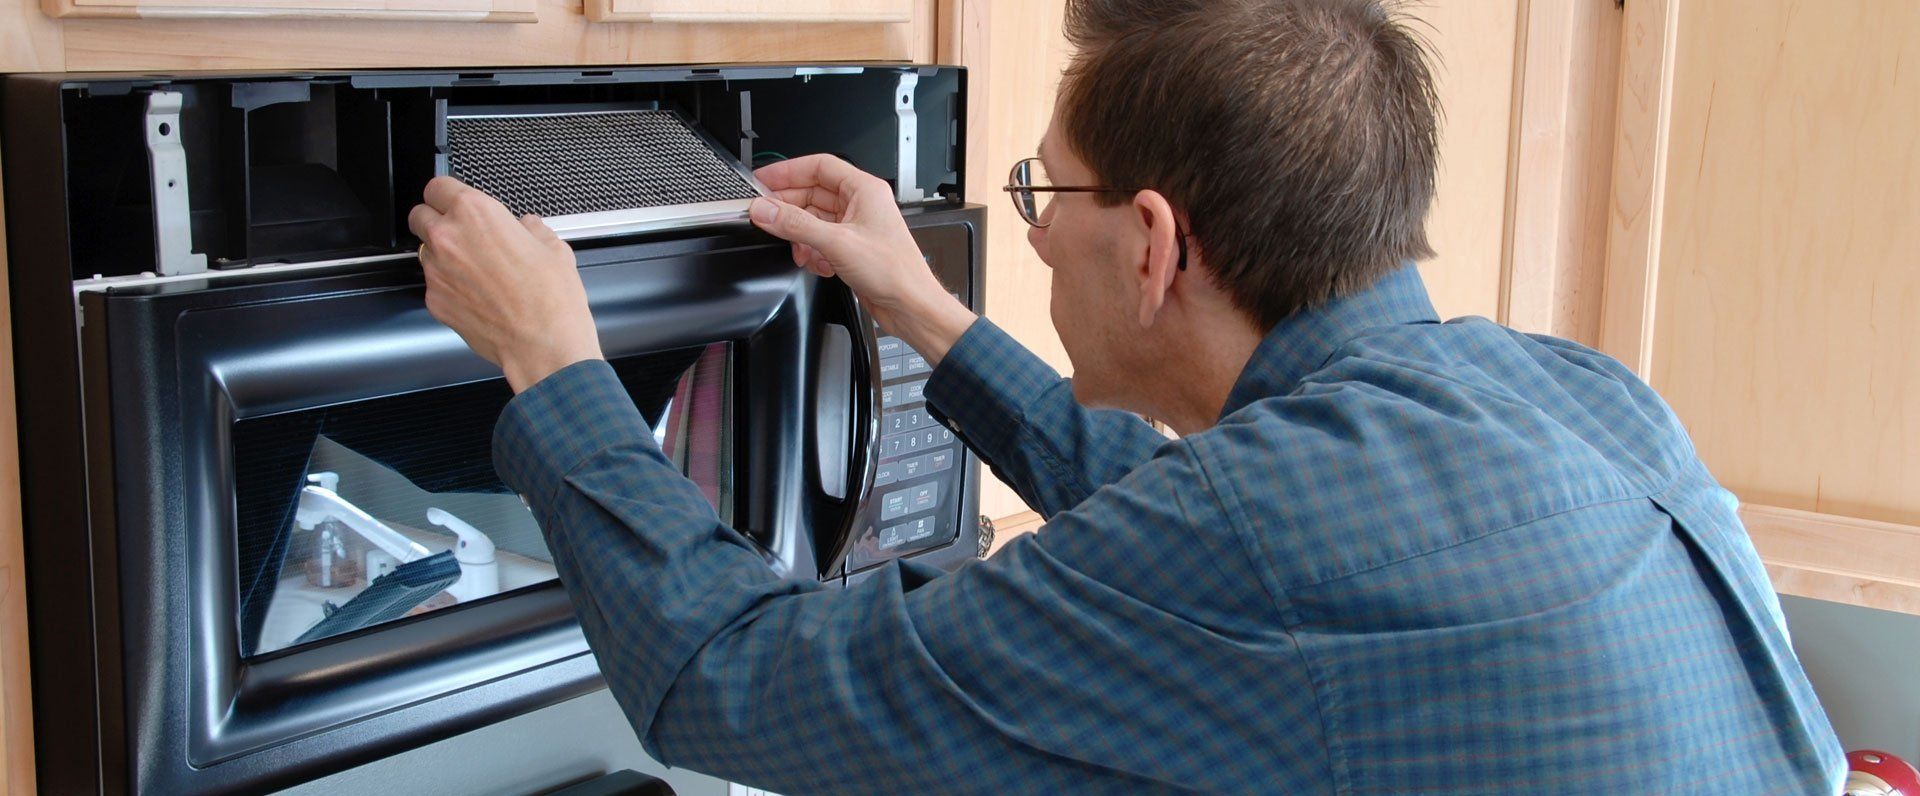 Microwave oven repairs